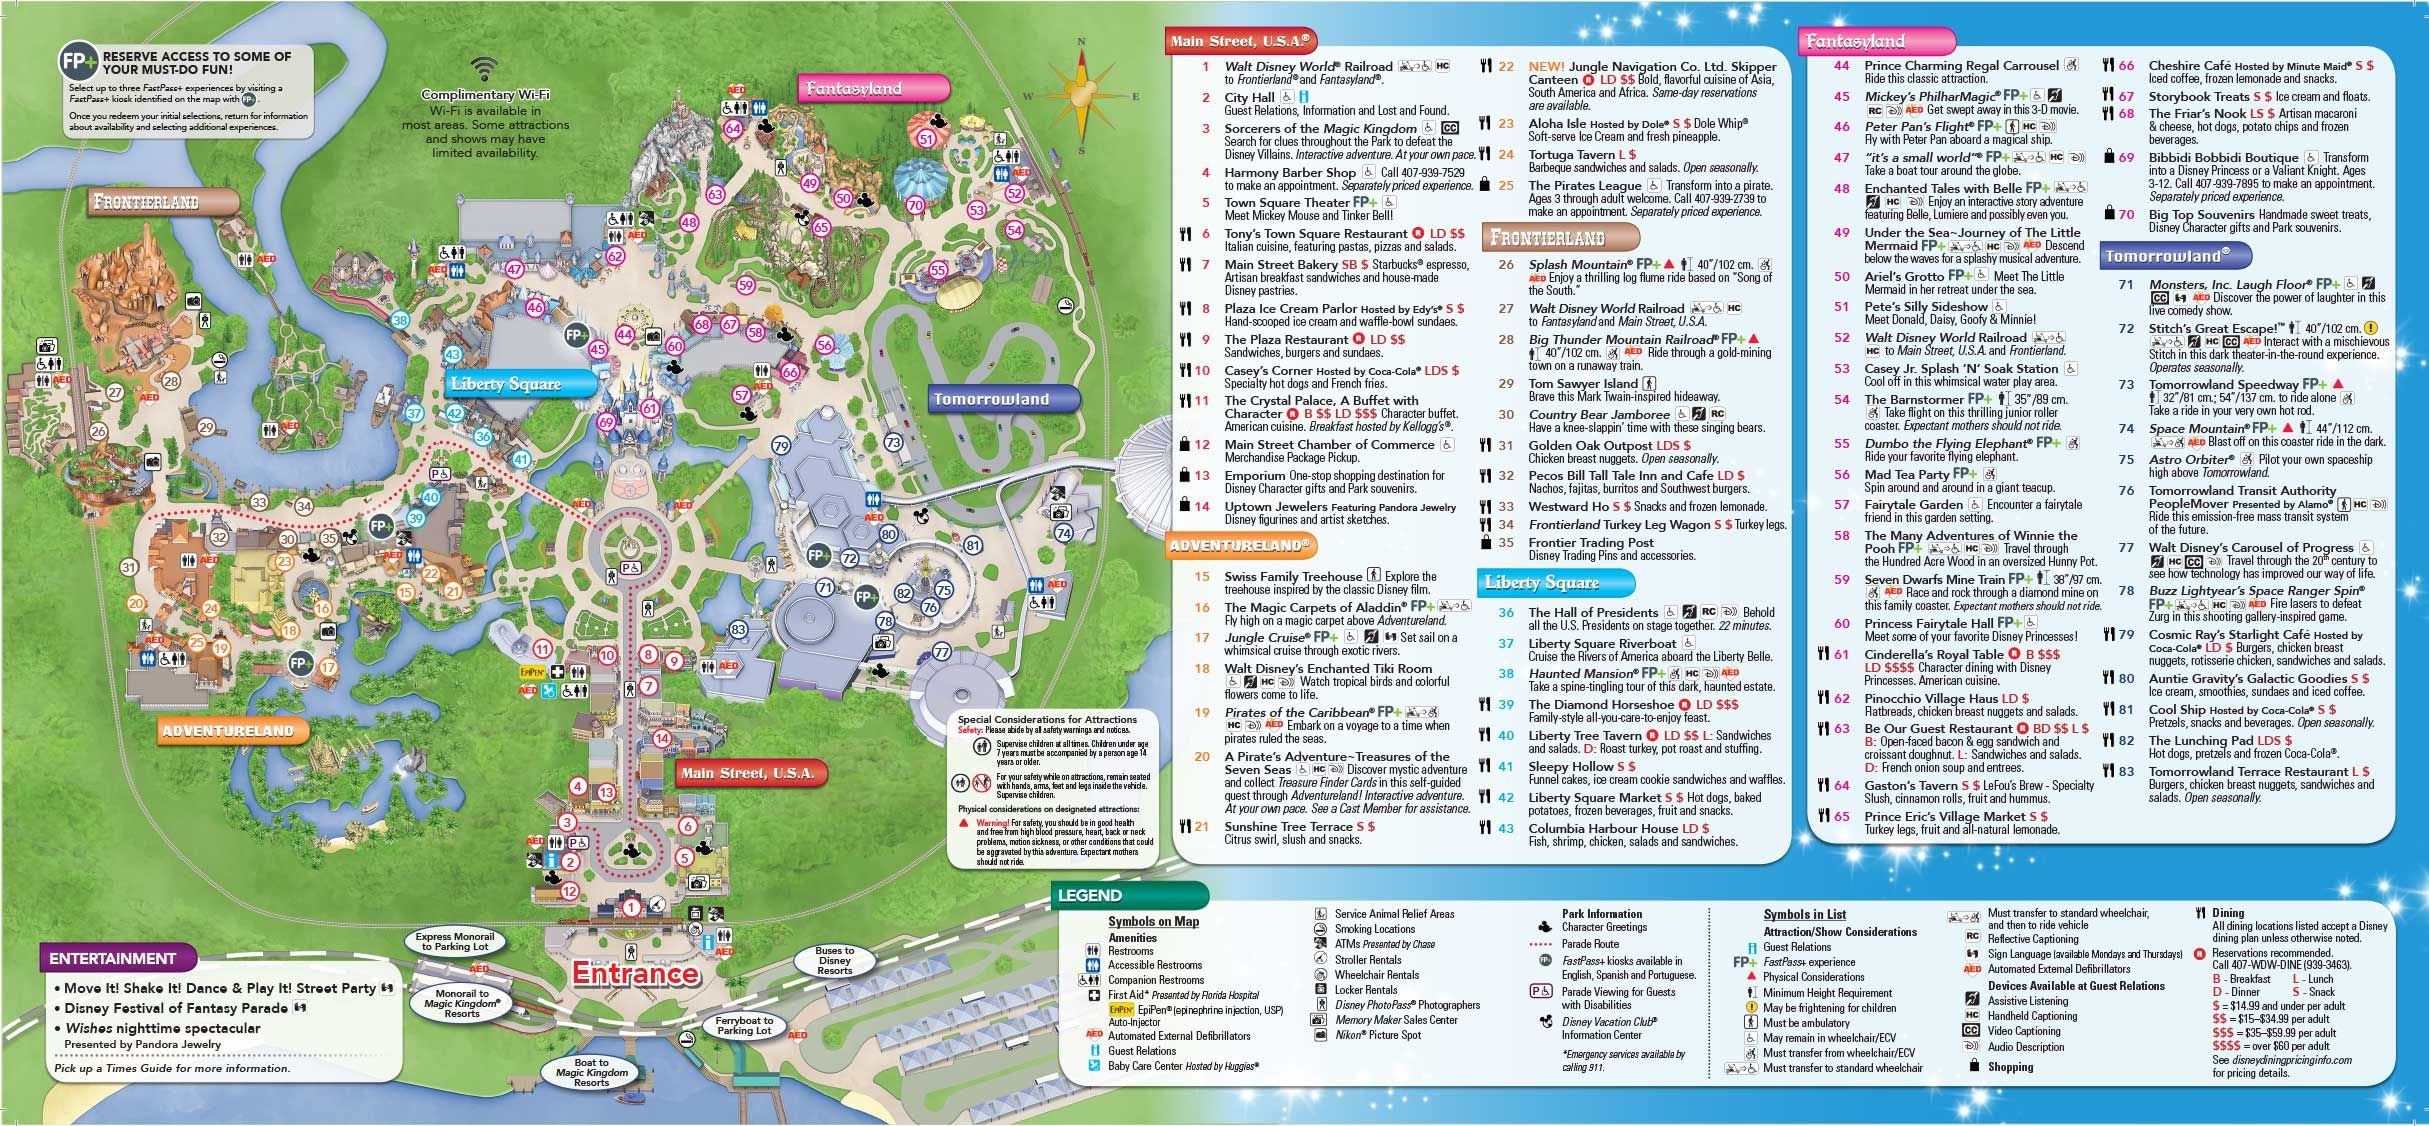 Rmh Travel Comparing Disneyland To Walt Disney World.magic - Disney World Florida Theme Park Maps